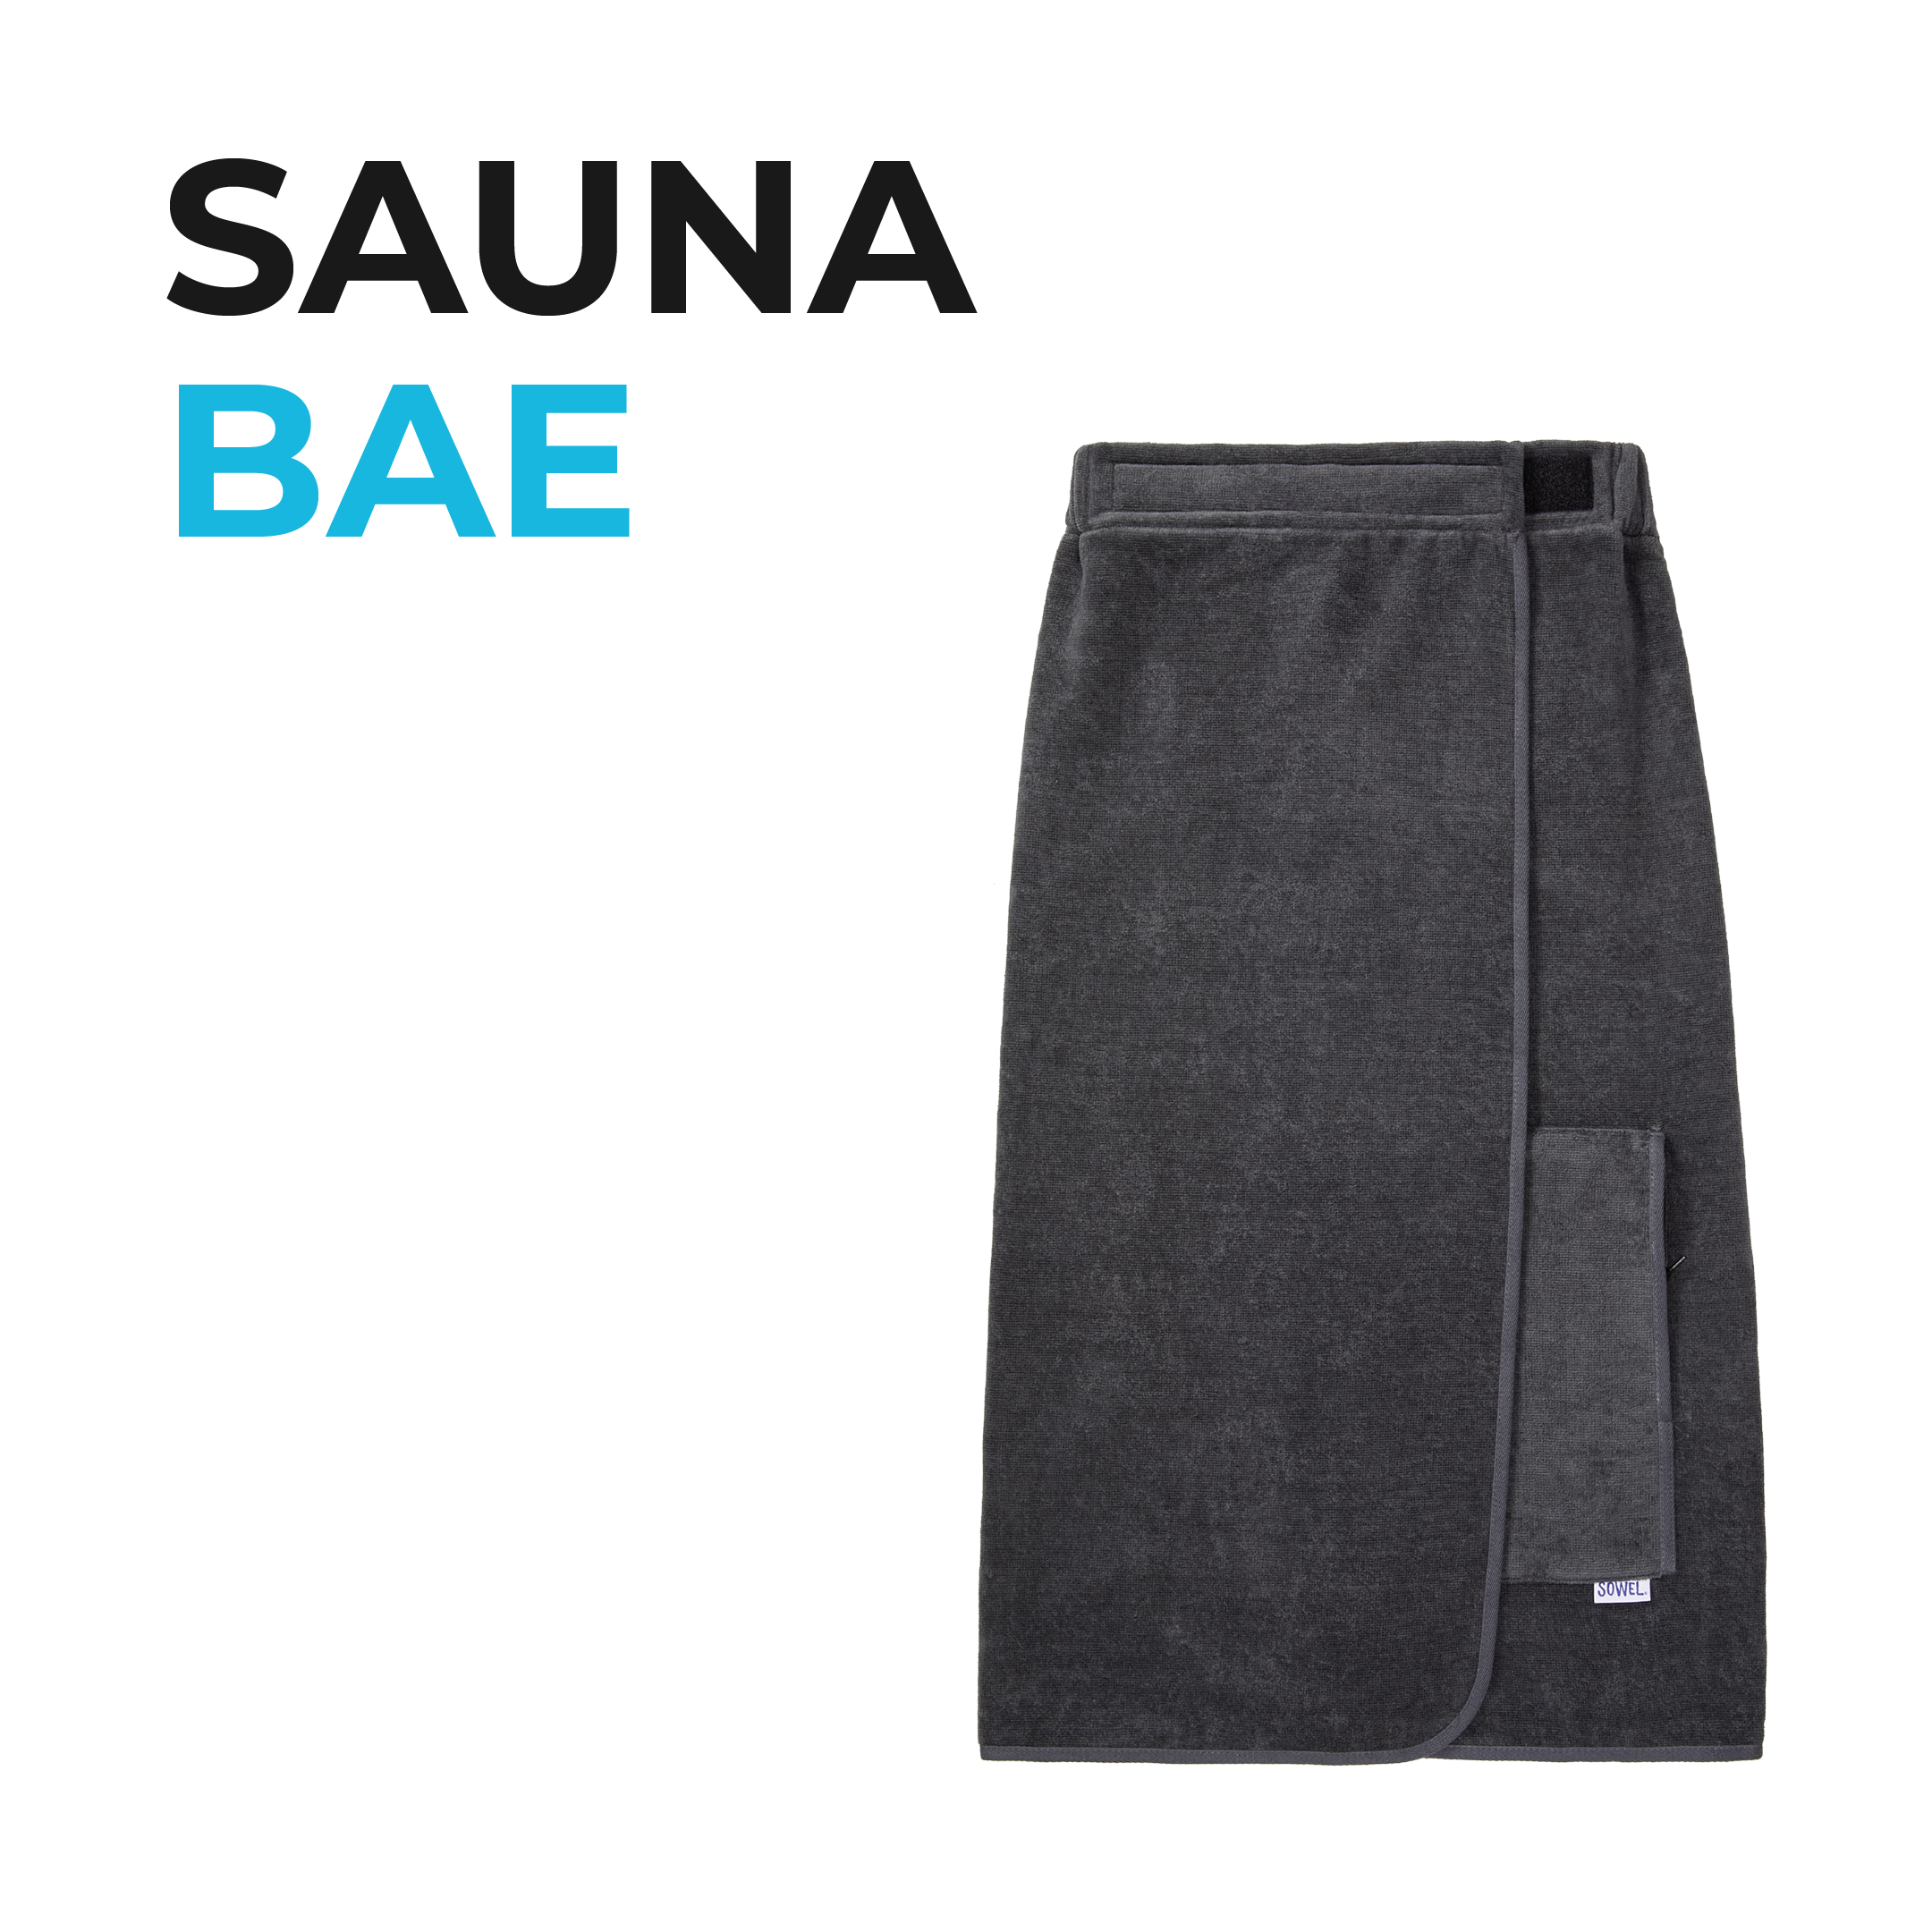 Sowel® Sauna Bae - Saunakilt Damen - 100% Bio-Baumwolle